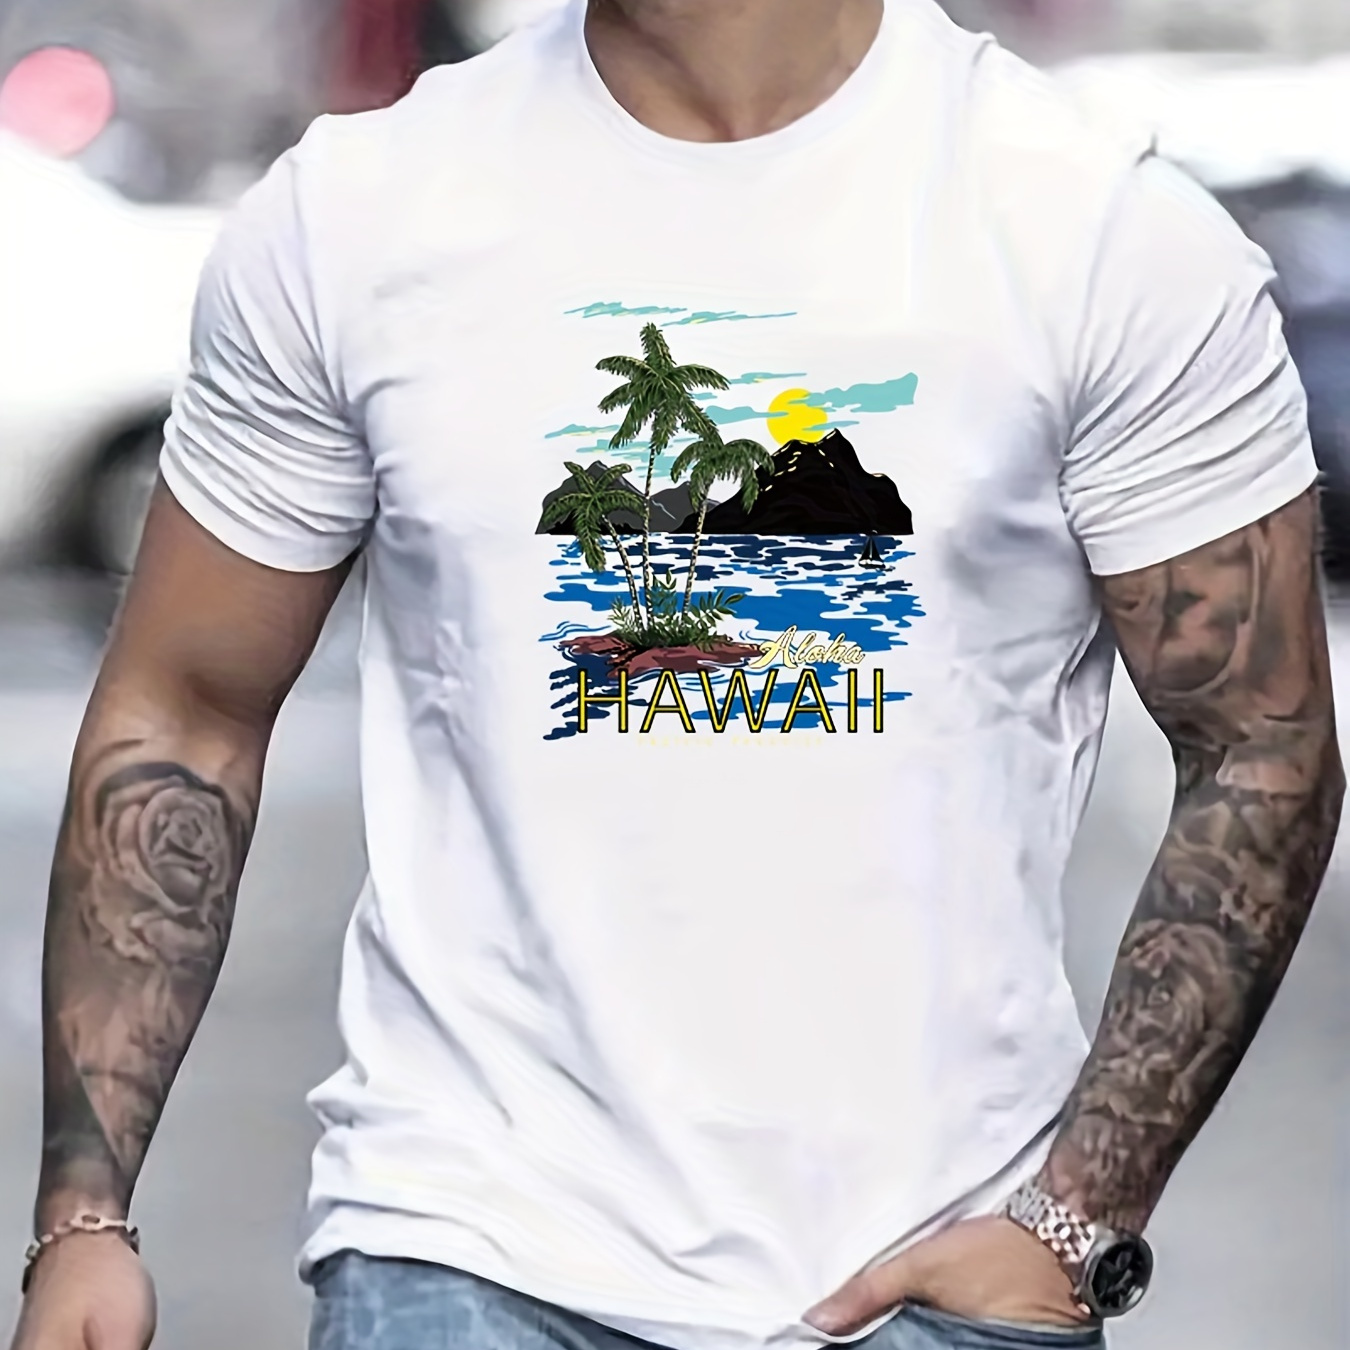 

Hawaii Island Pattern Print Men's Comfy T-shirt, Graphic Tee Men's Summer Outdoor Clothes, Men's Clothing, Tops For Men